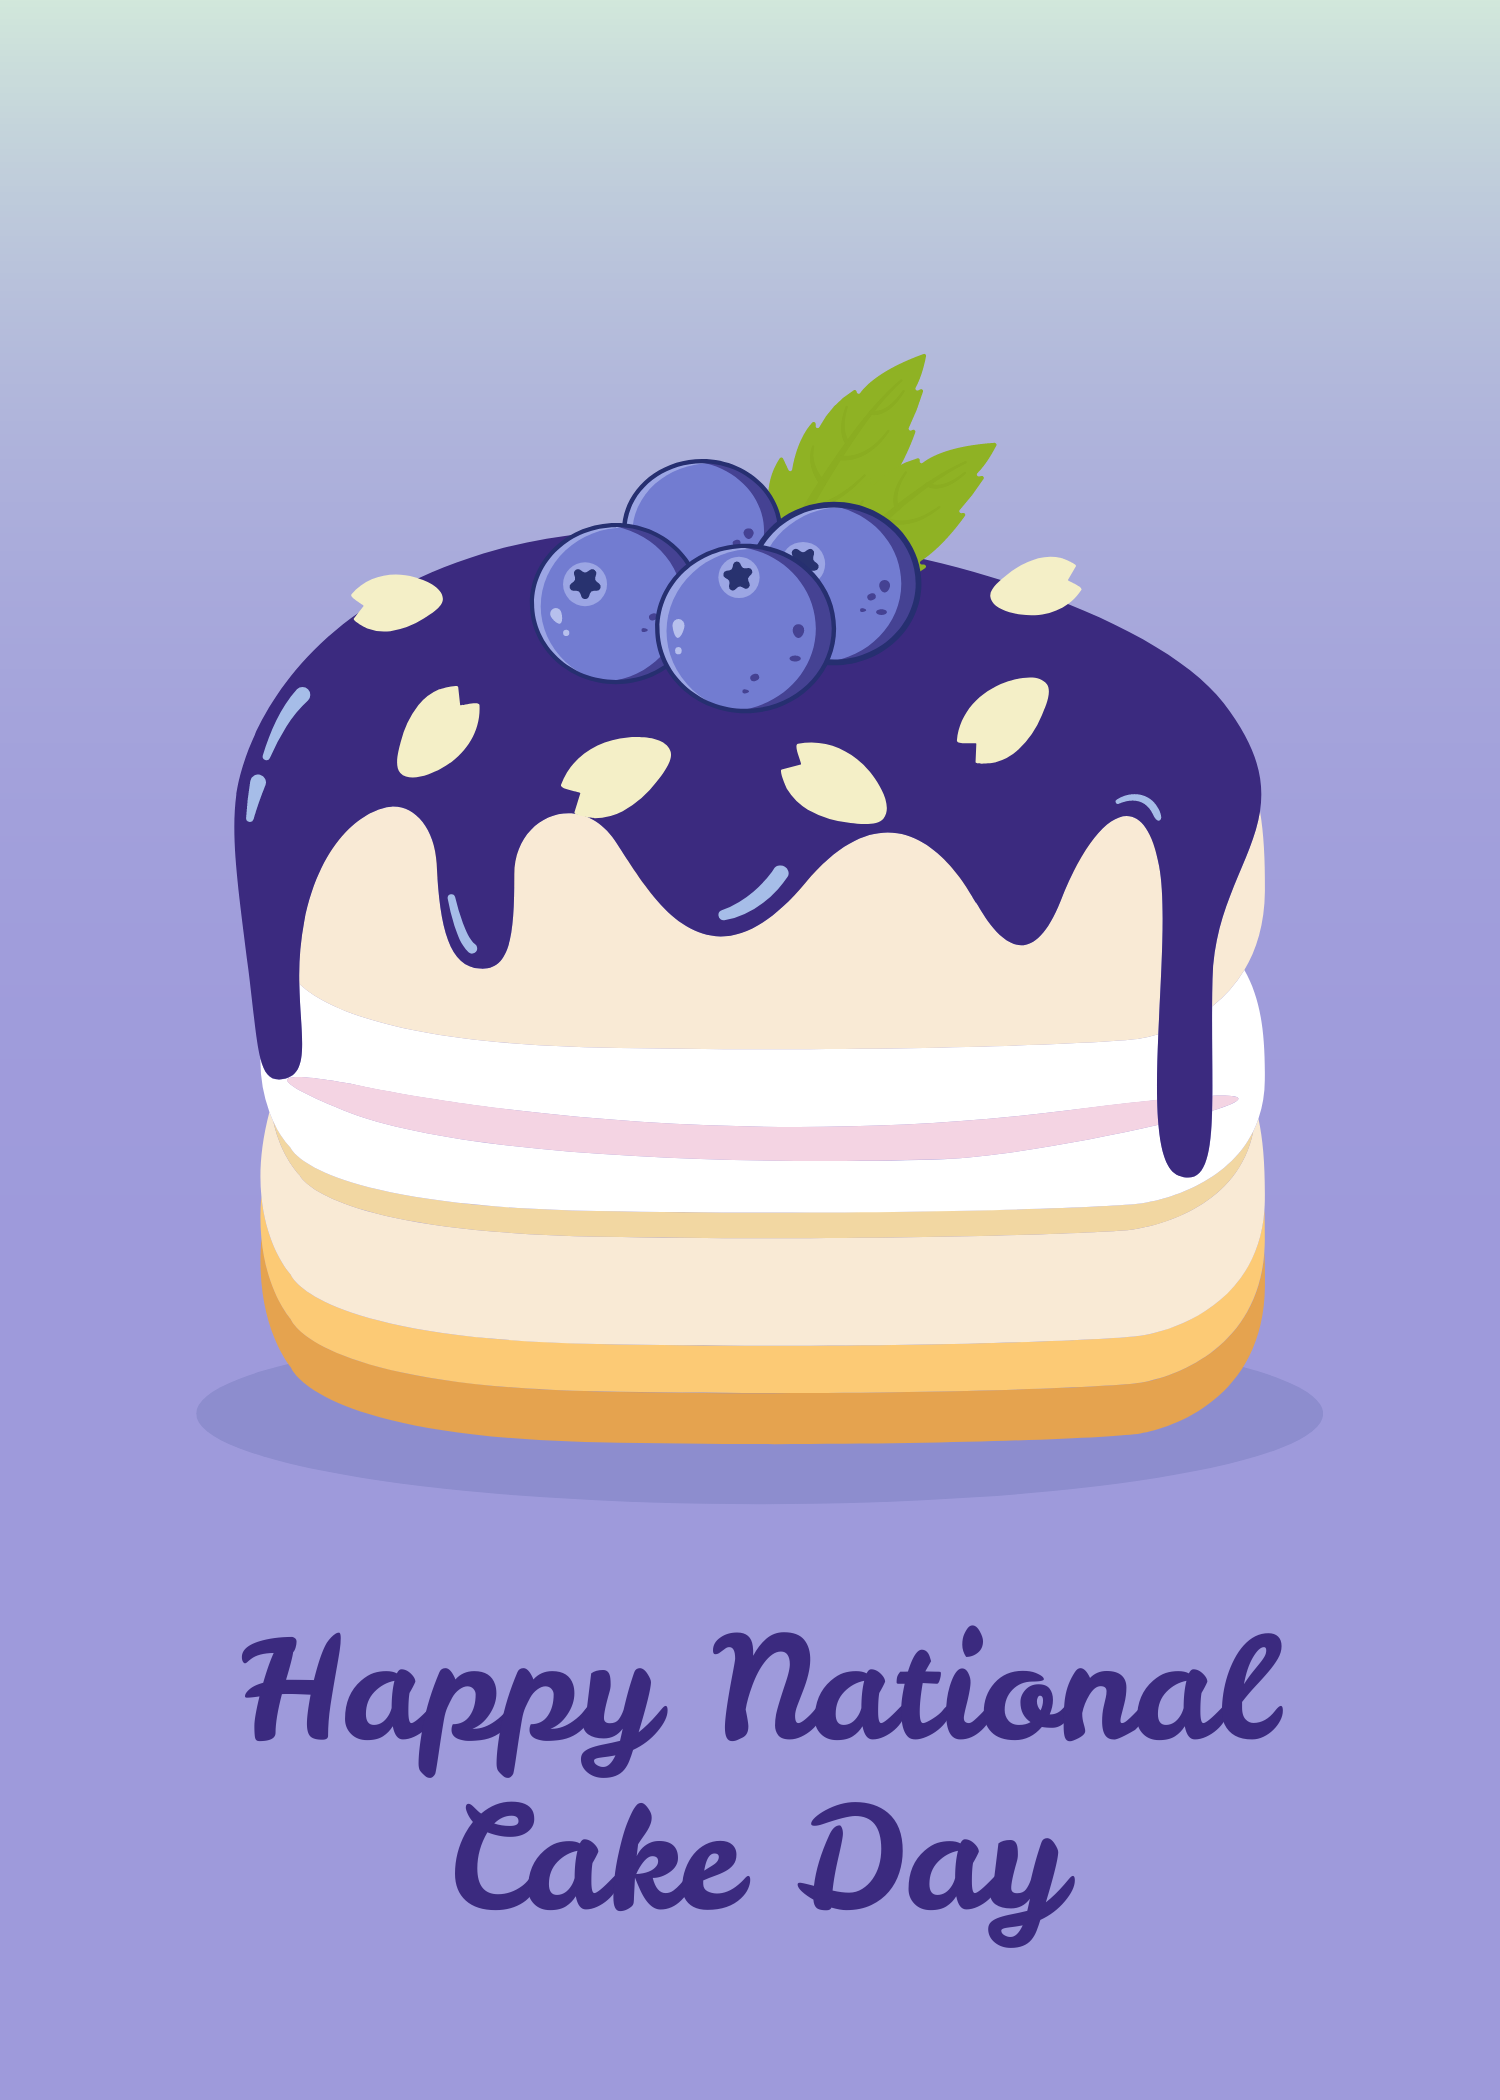 11 National Cake Day Vector Illustration | Deeezy